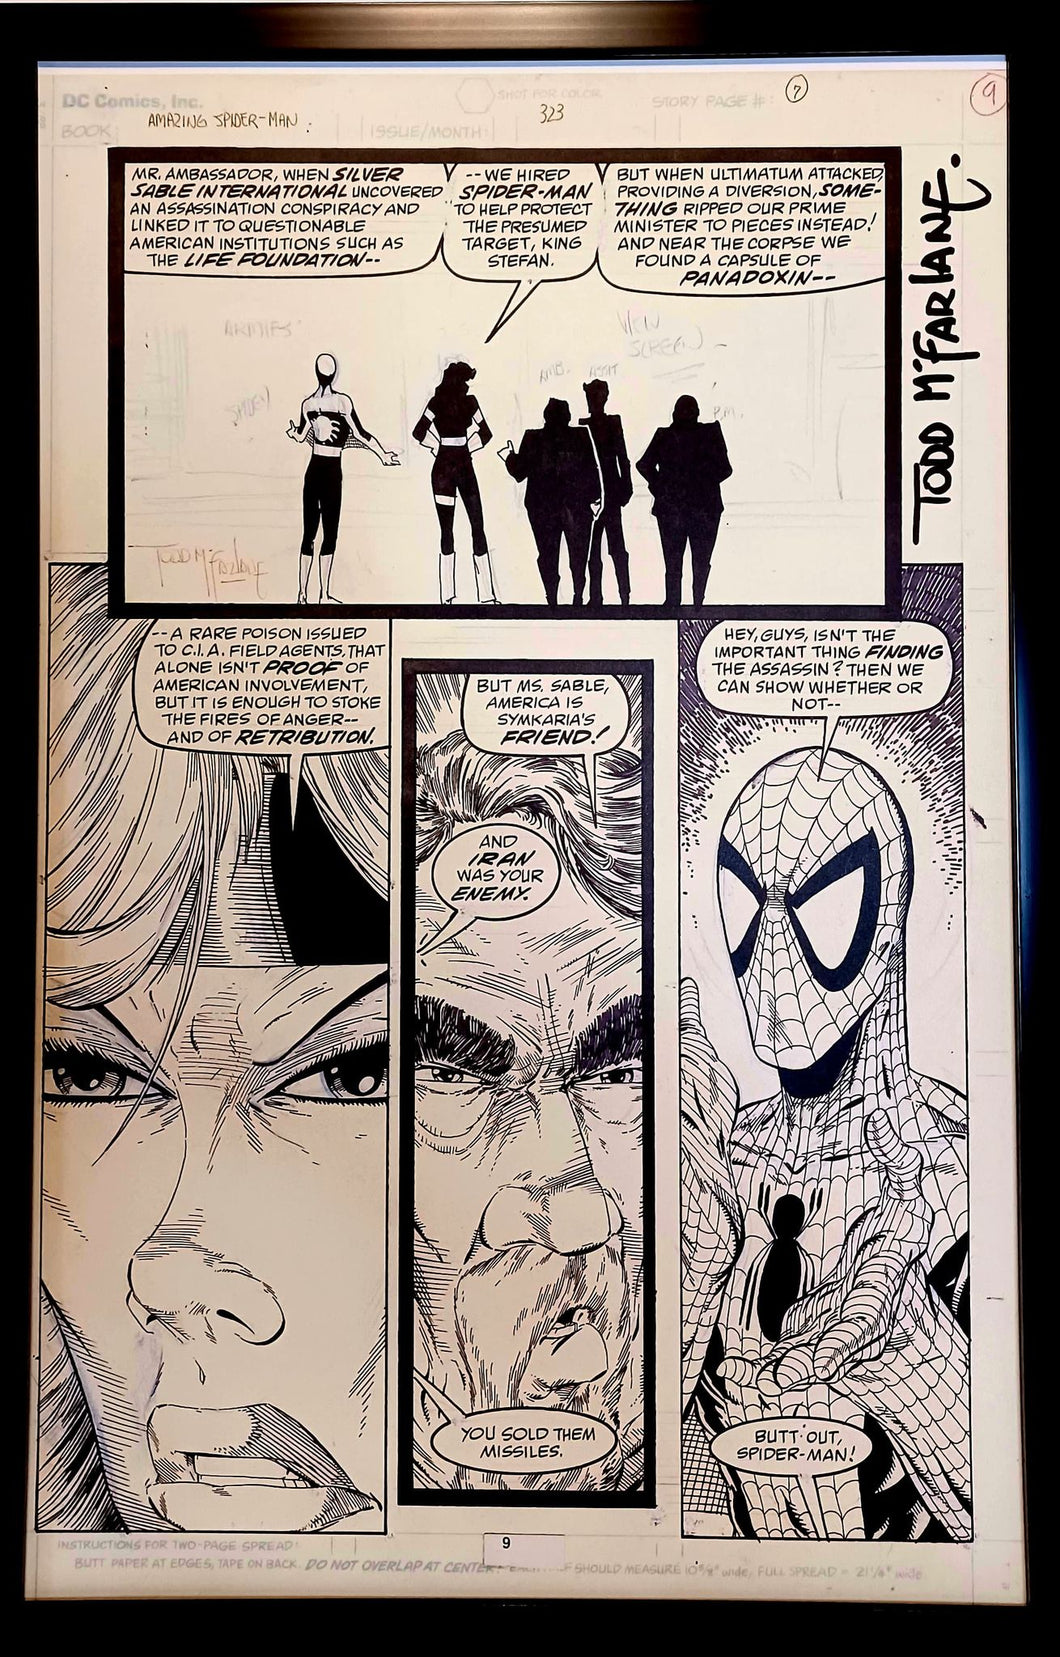 Amazing Spider-Man #323 pg. 7 by Todd McFarlane 11x17 FRAMED Original Art Print Comic Poster